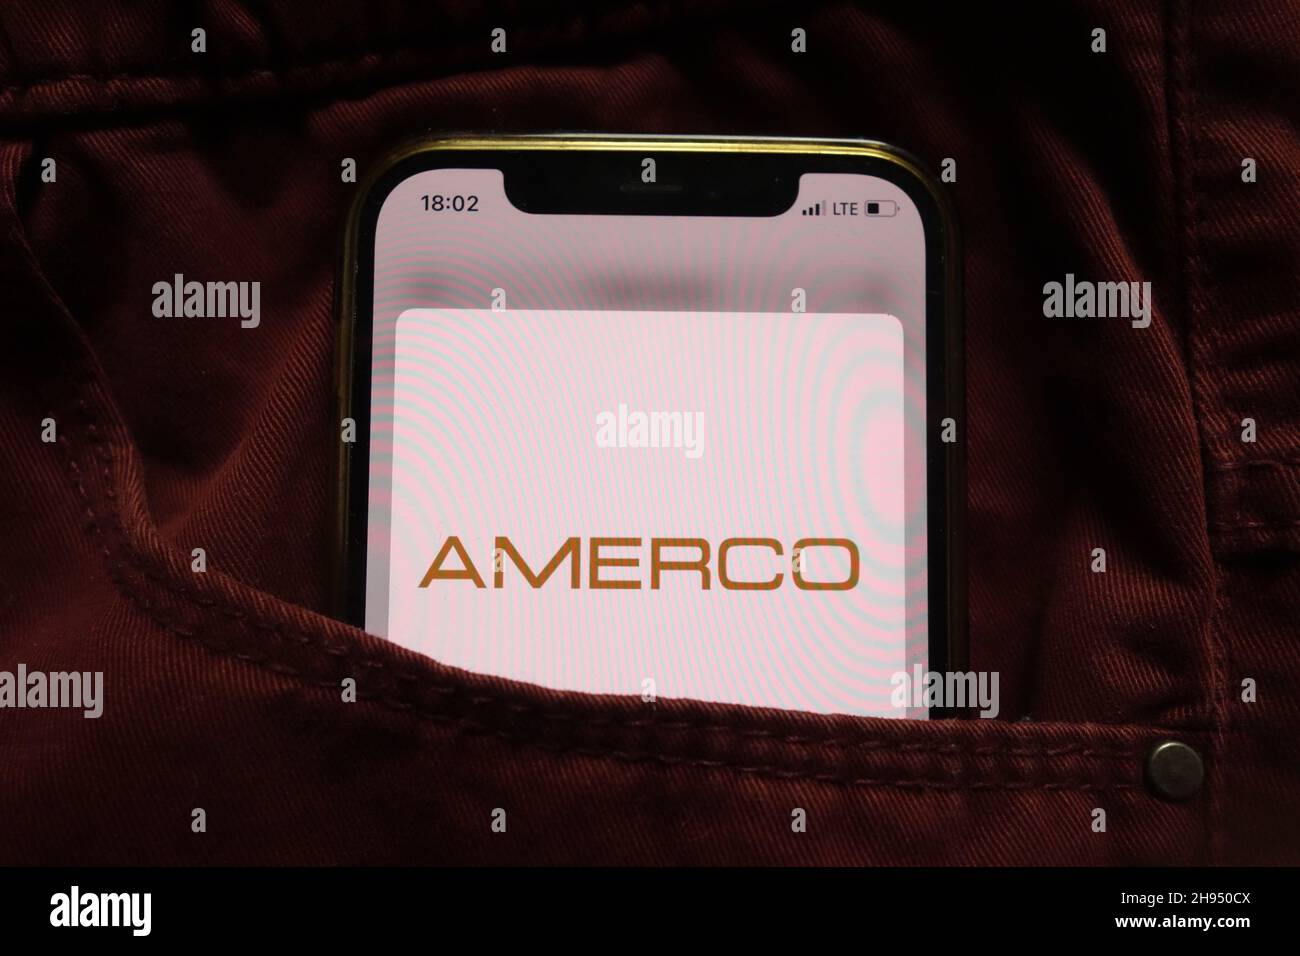 KONSKIE, POLAND - September 15, 2021: Amerco company logo displayed on mobile phone hidden in jeans pocket Stock Photo